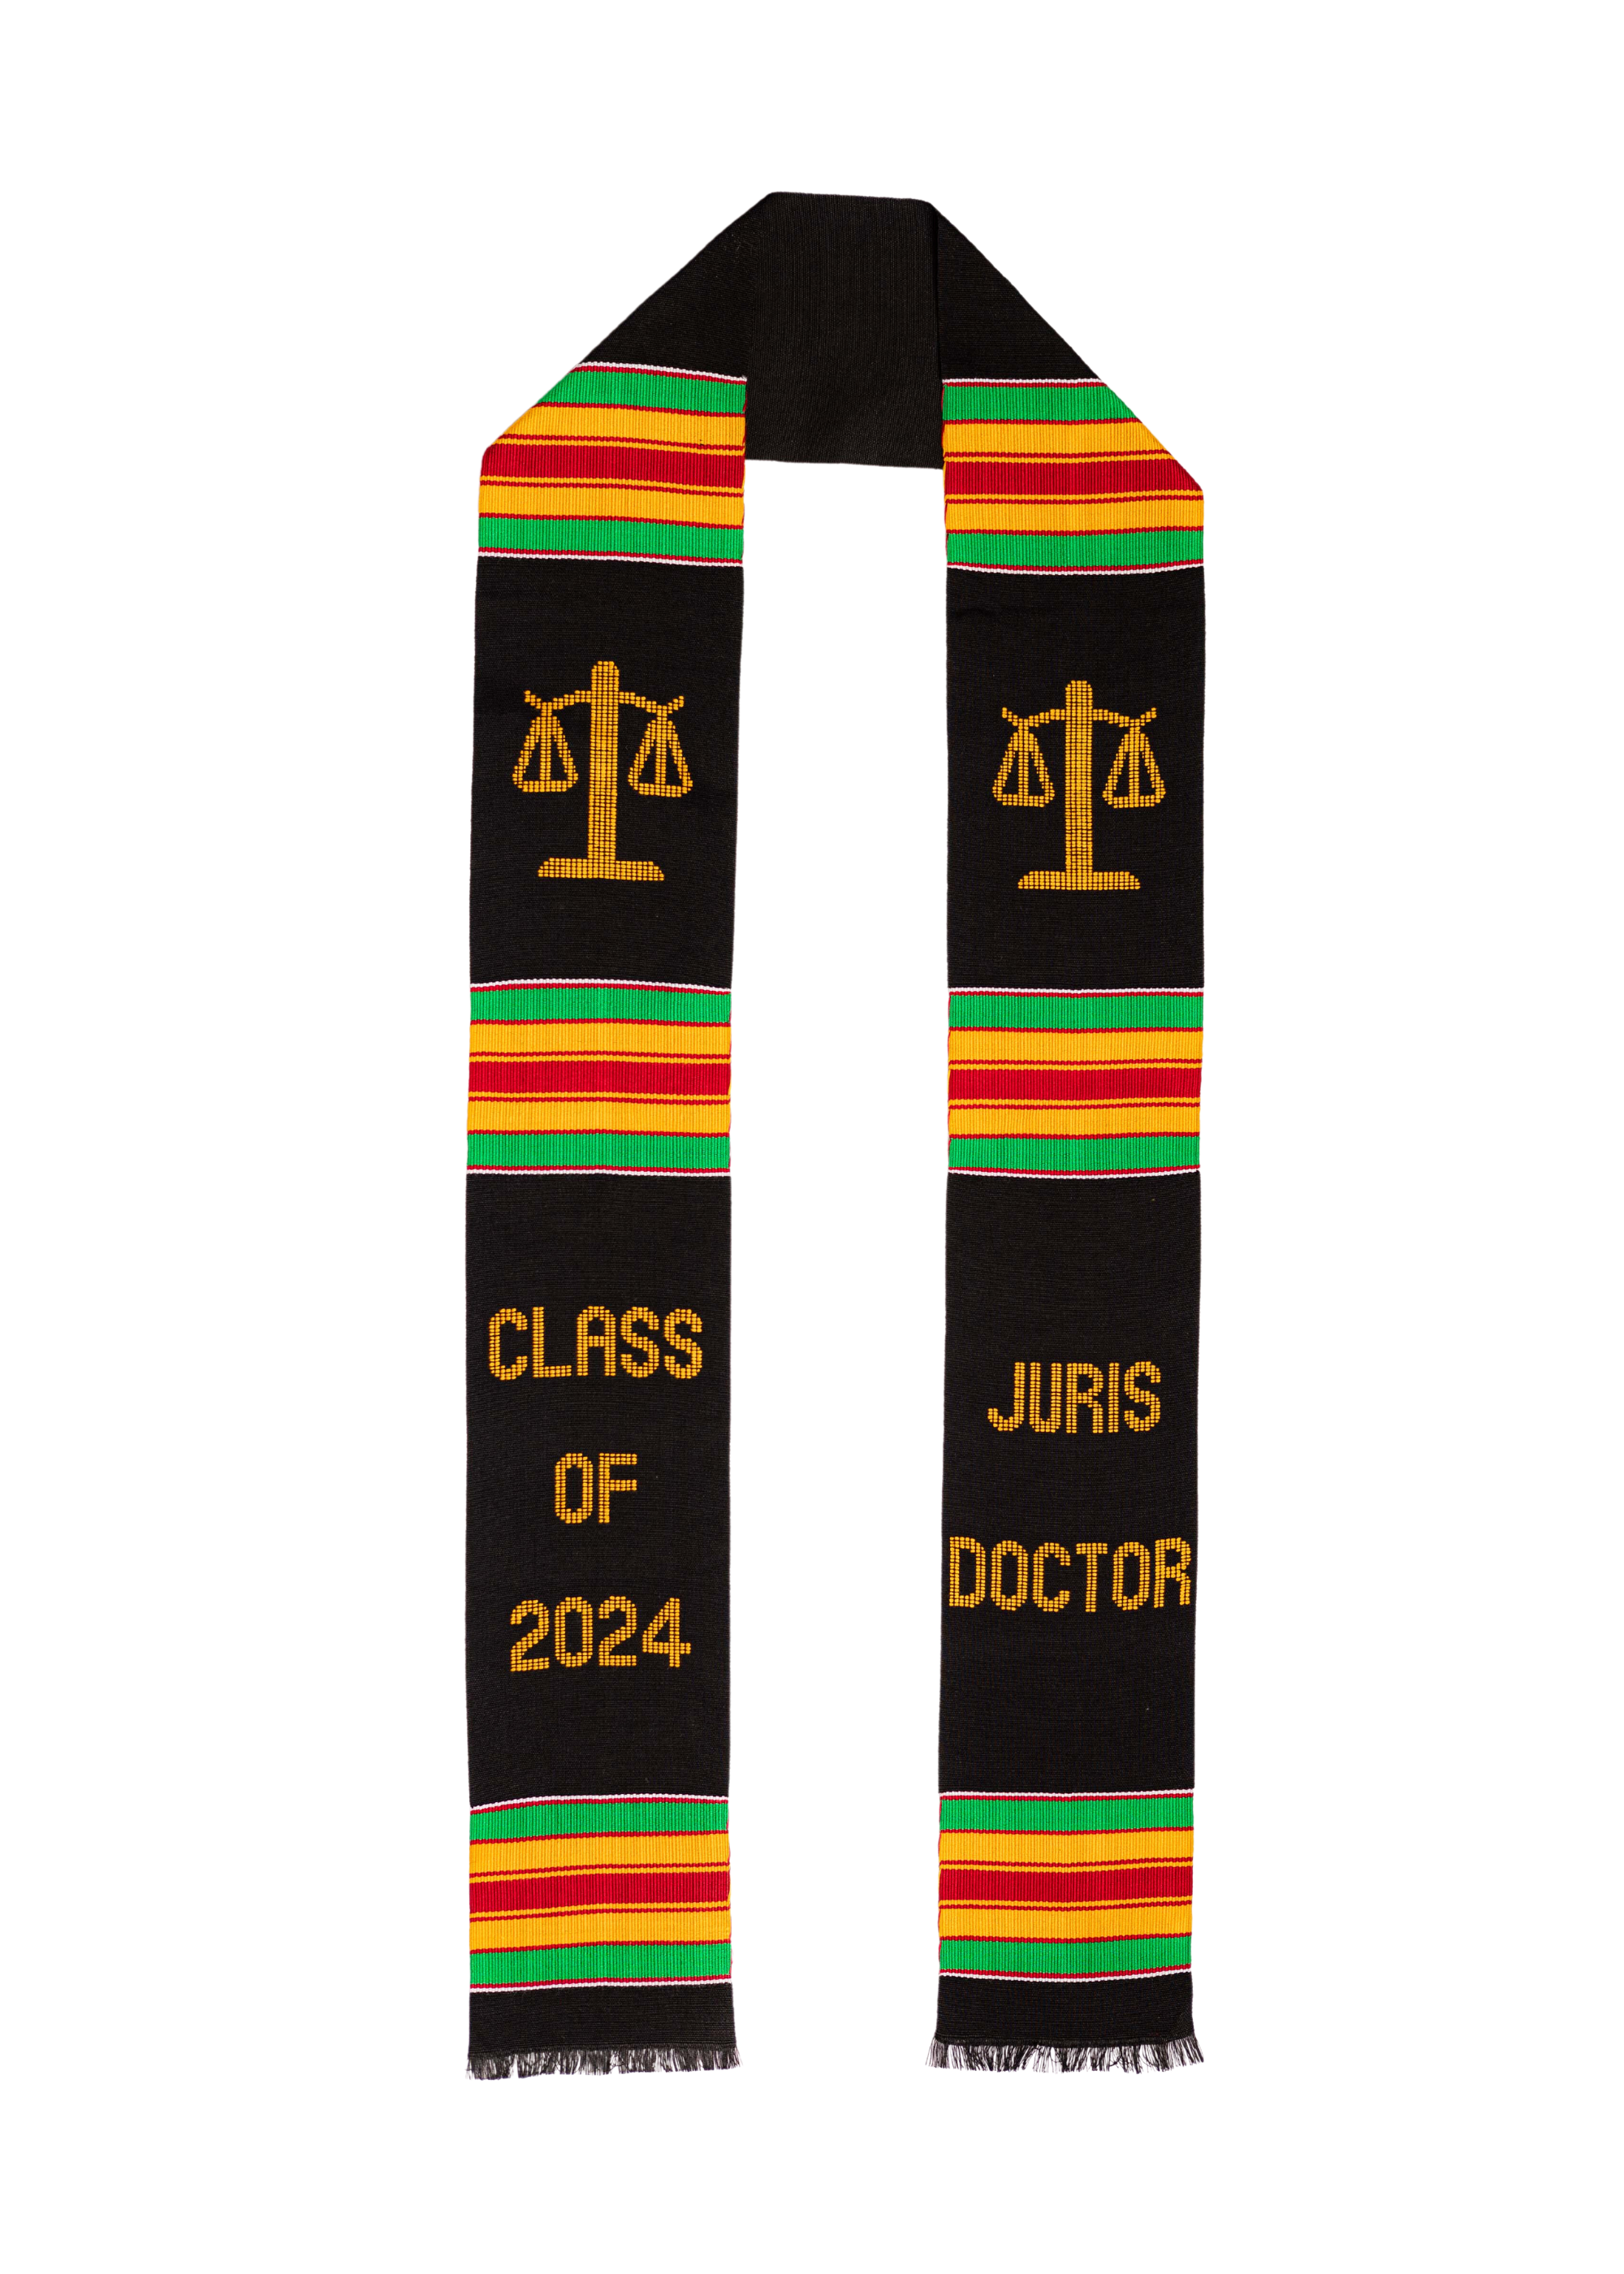 JURIS DOCTOR 2024